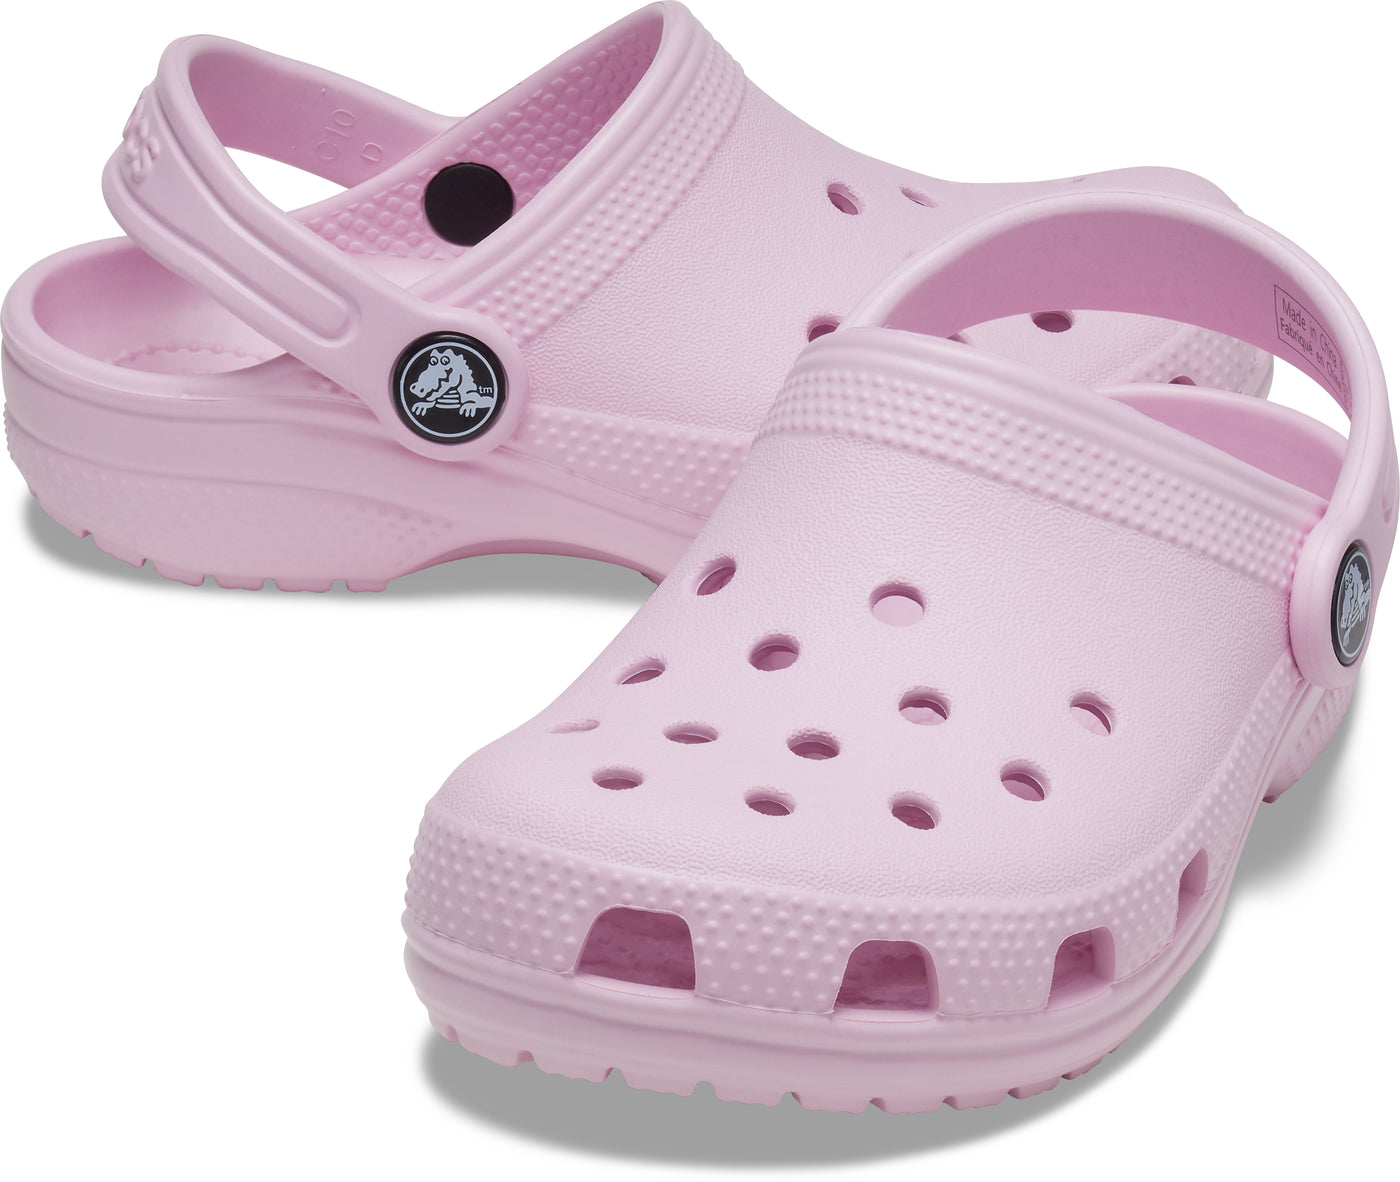 Crocs Classic Clog Ballerina Pink Kids